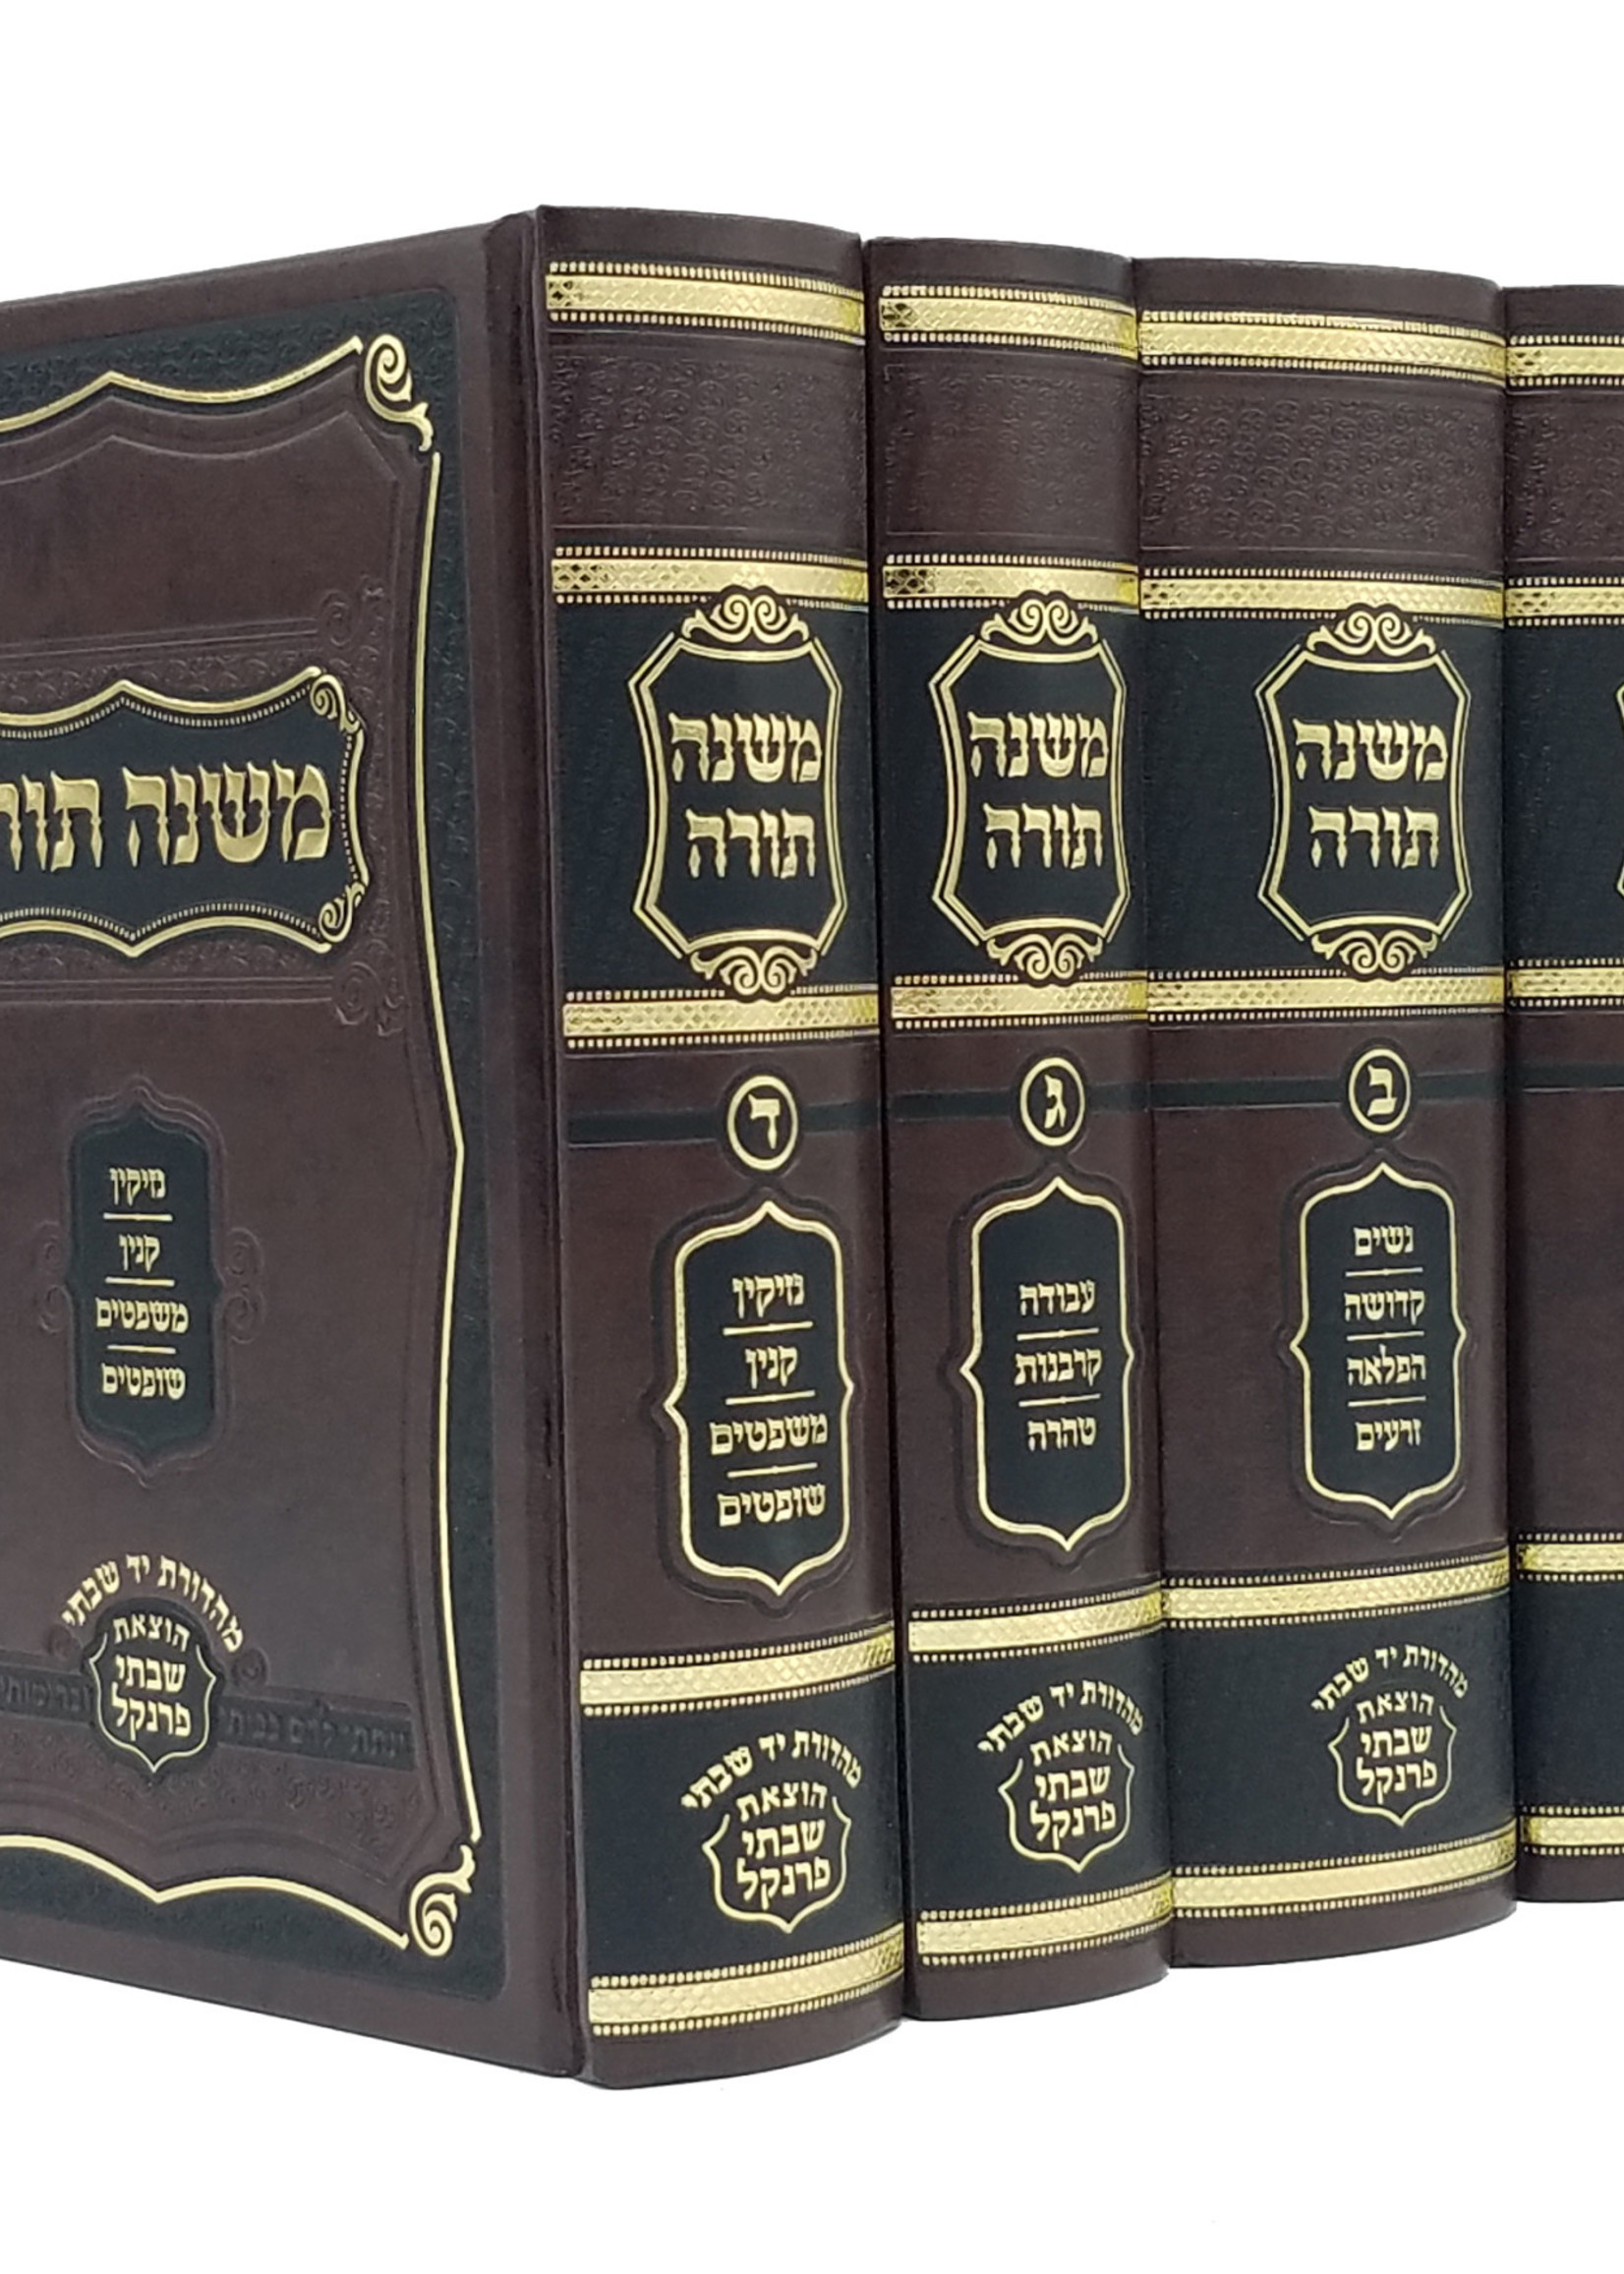 Rabbi Moshe Ben Maimon ( Rambam ) Mishneh Torah Rambam Yad Shabsi Edition / 4 Volume Set משנה תורה רמב"ם פרנקל יד שבתי החדש בינוני ד' כרכים